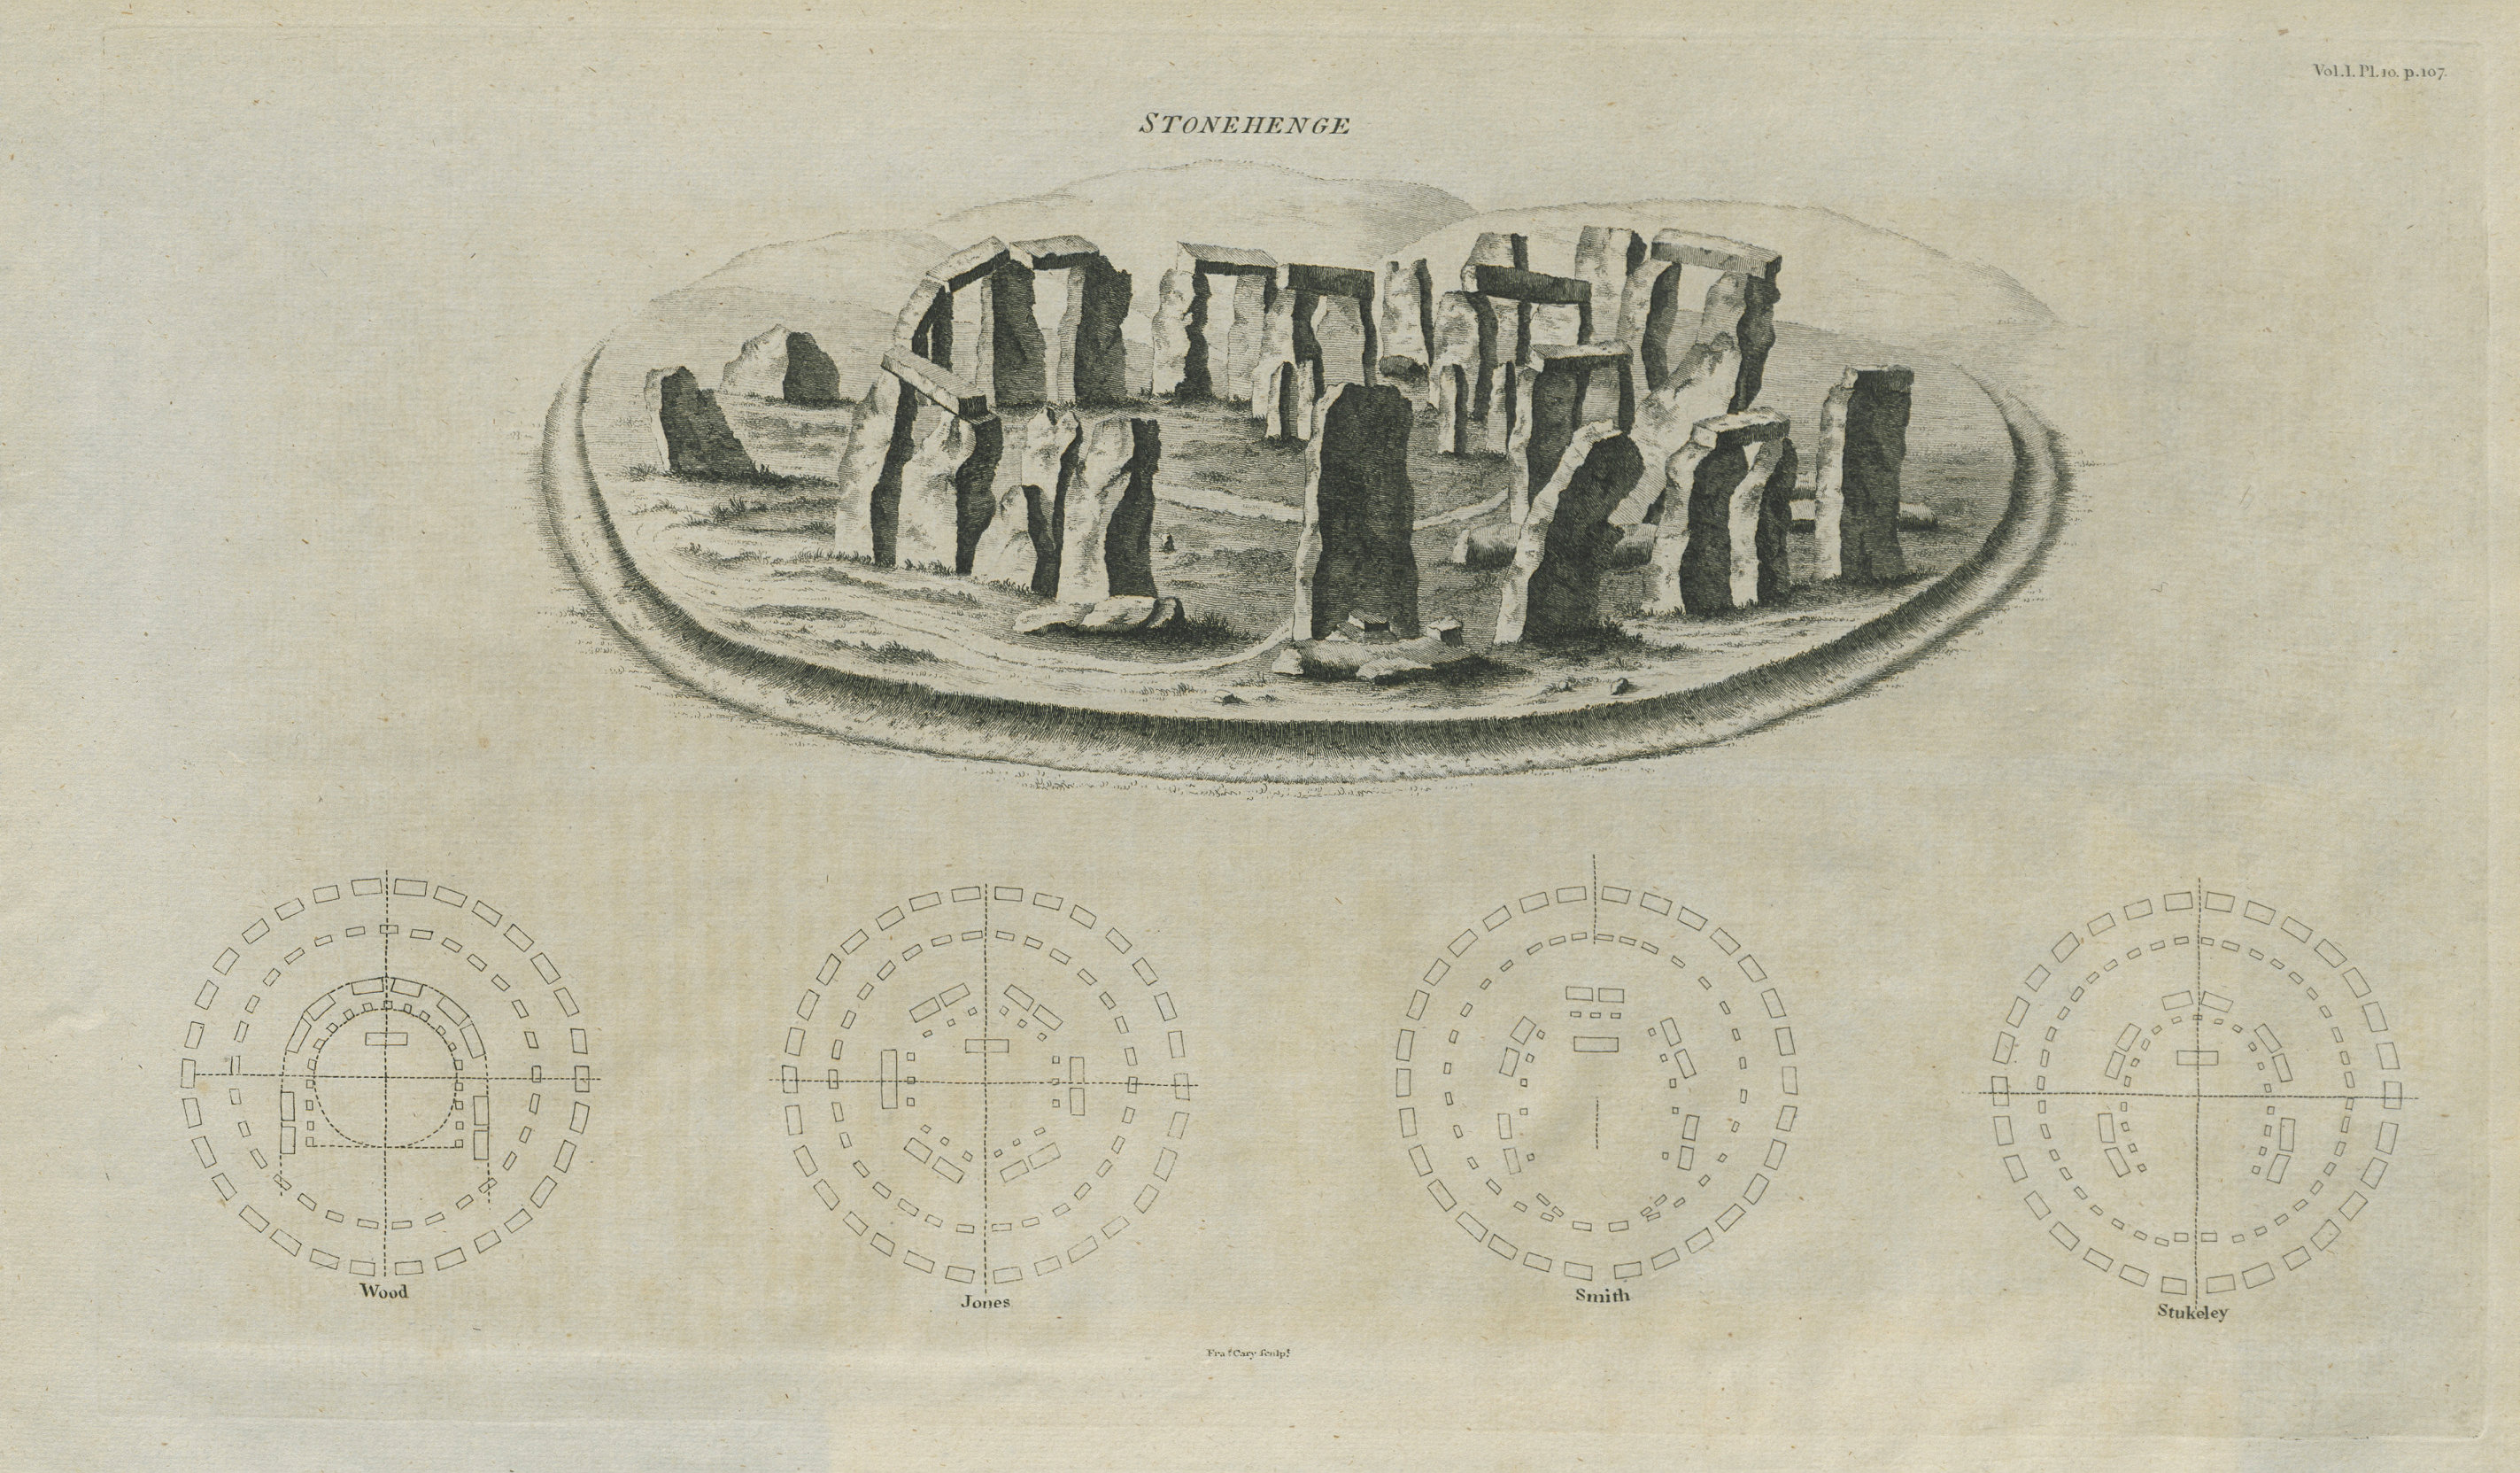 Stonehenge view & ground plans by Wood, Jones, Smith & Stukeley. CARY 1789 map